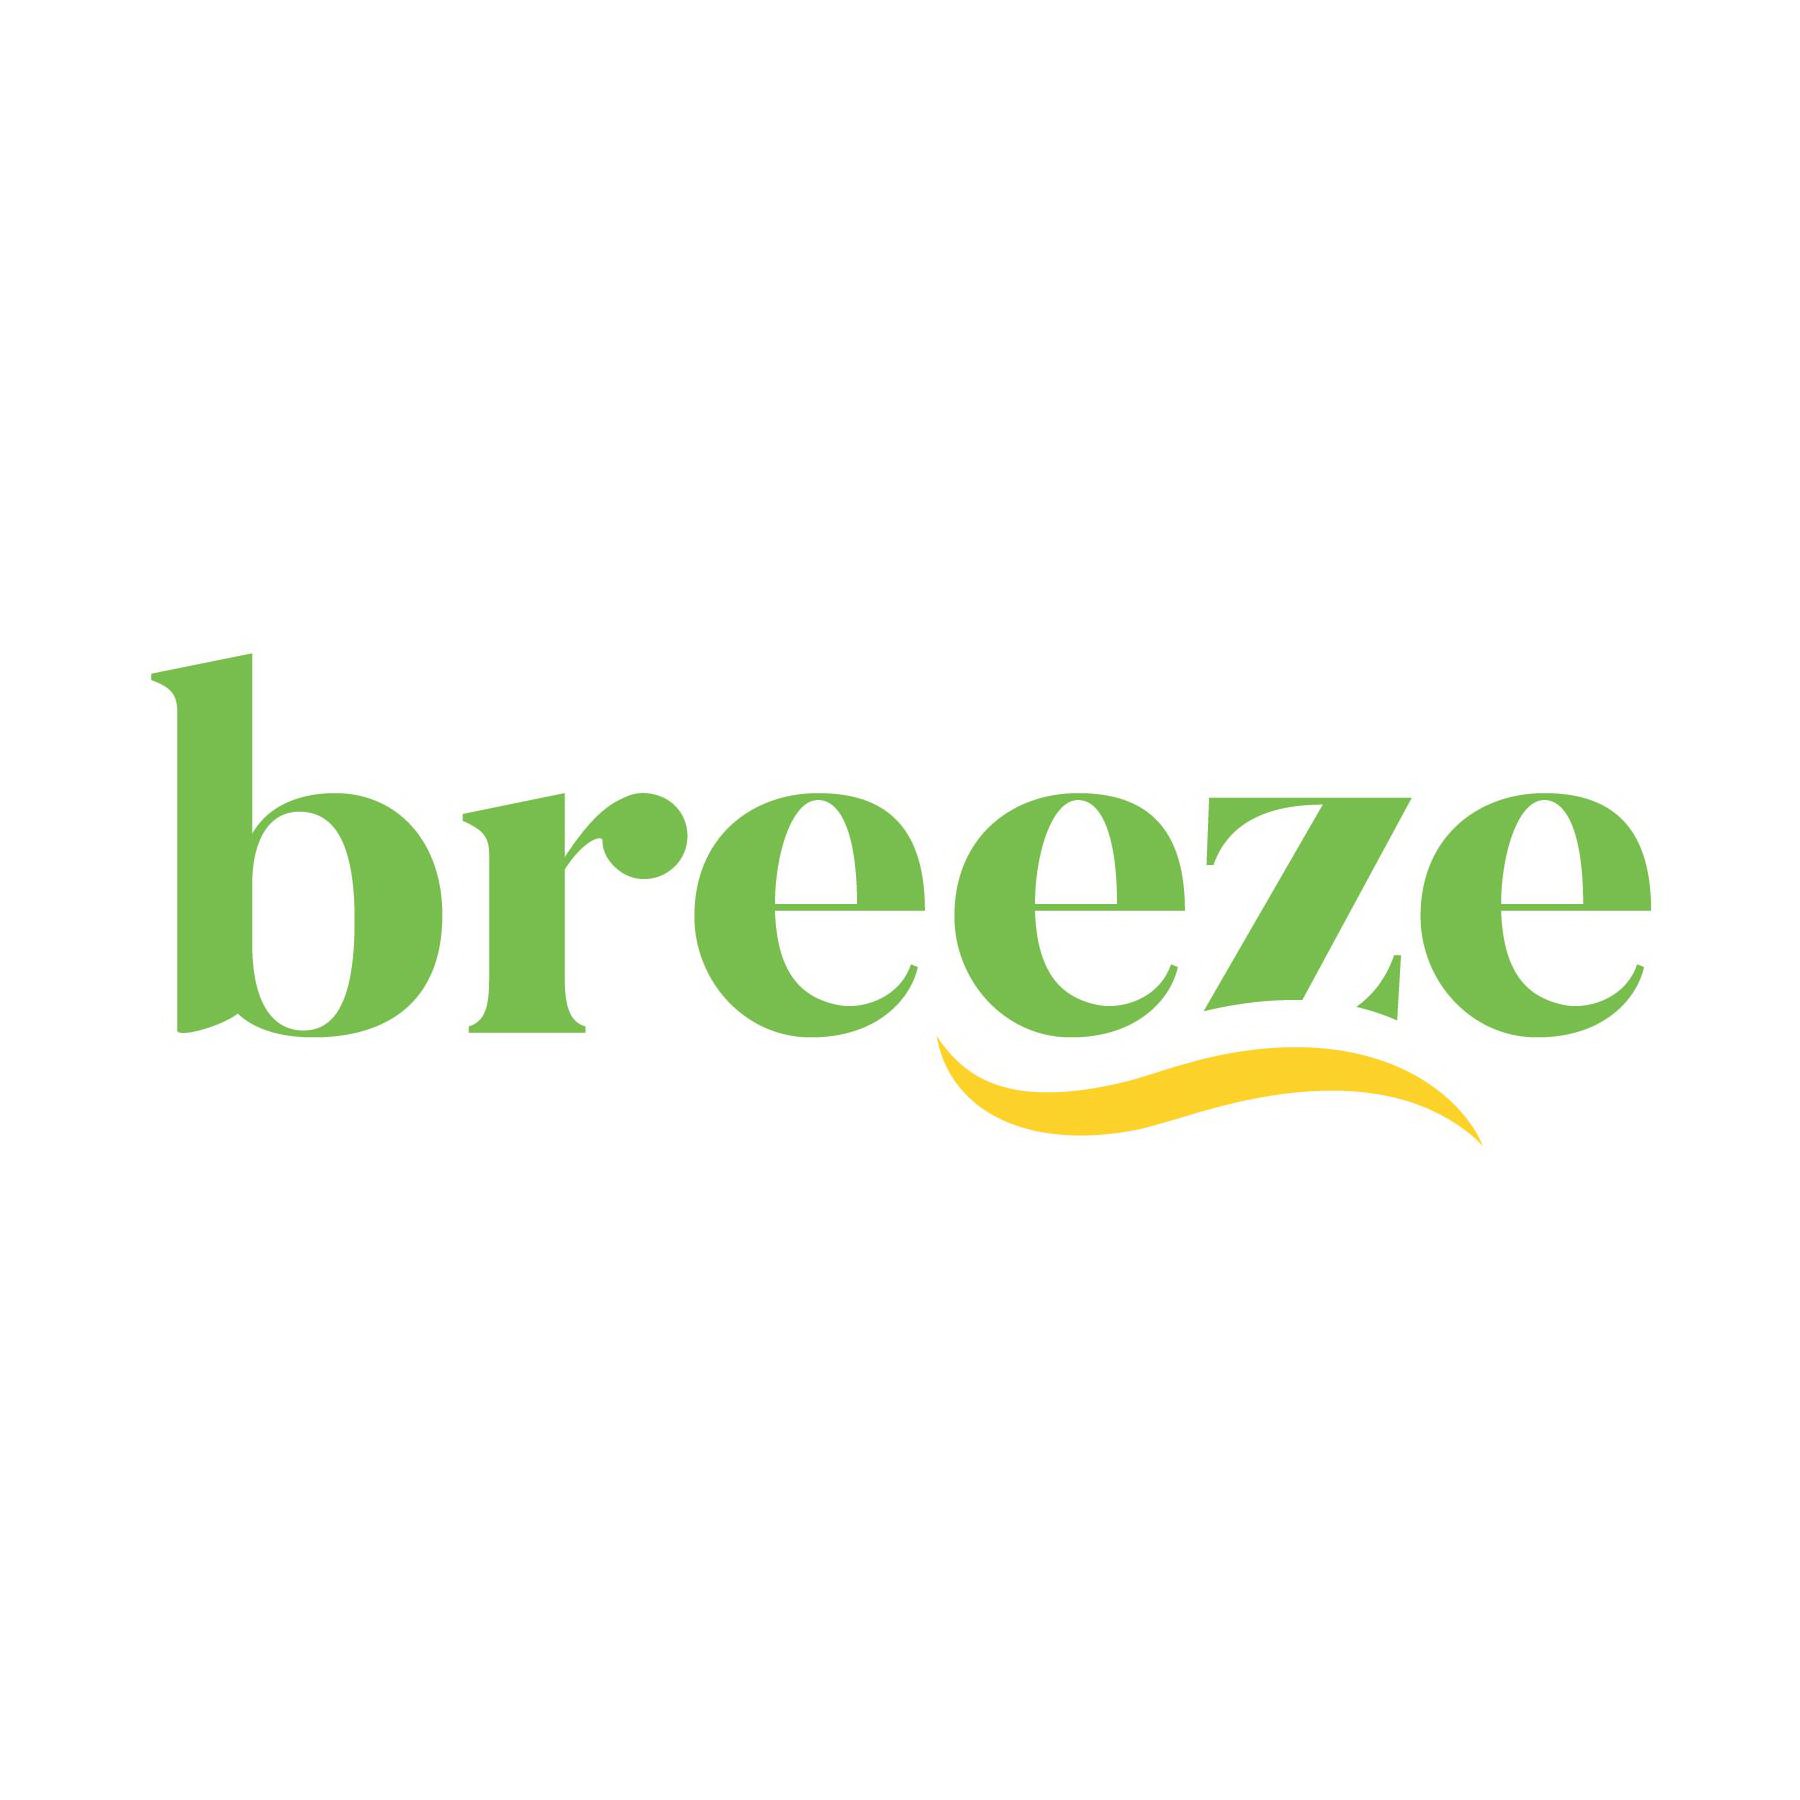 Trademark Logo BREEZE